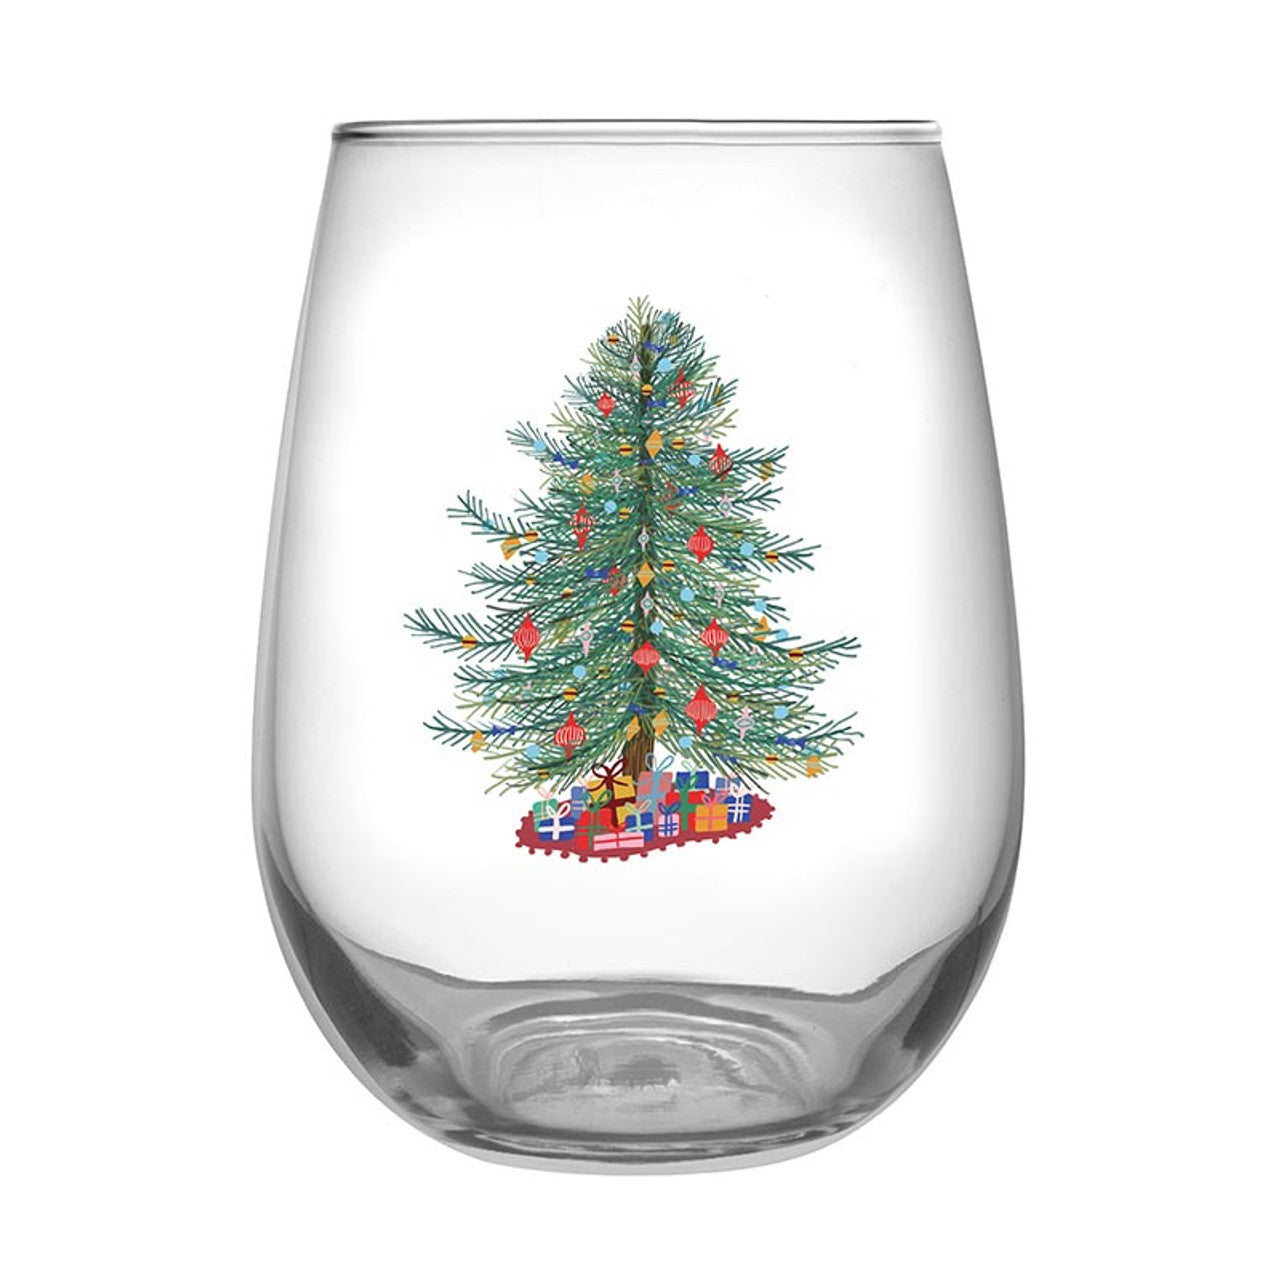 Spode Woodland Turkey Wine Glasses, Set of 4 19 Oz Stemless Wine Glasses,  Made of Glass Classic Glassware For Thanksgiving or Holidays 